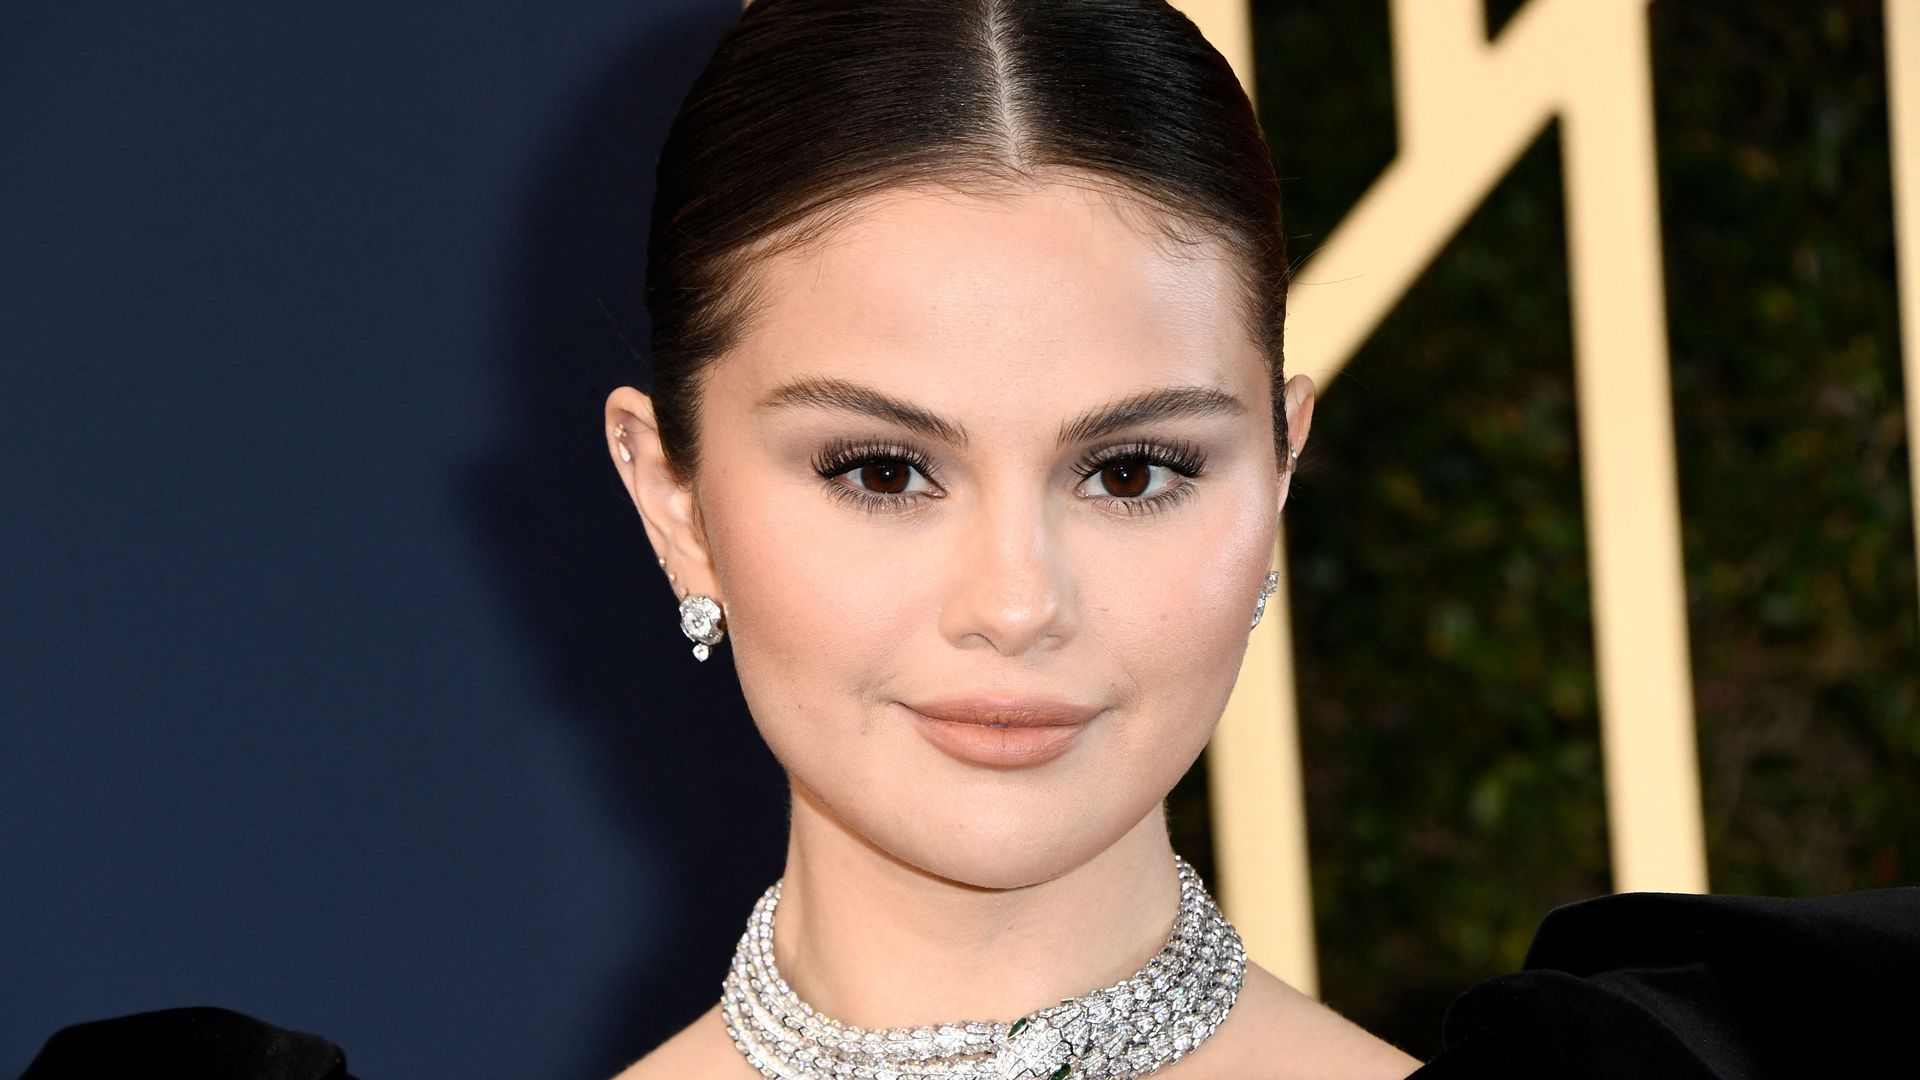 US singer Selena Gomez arrives for the 28th Annual Screen Actors Guild (SAG) Awards at the Barker Hangar in Santa Monica, California, on February 27, 2022